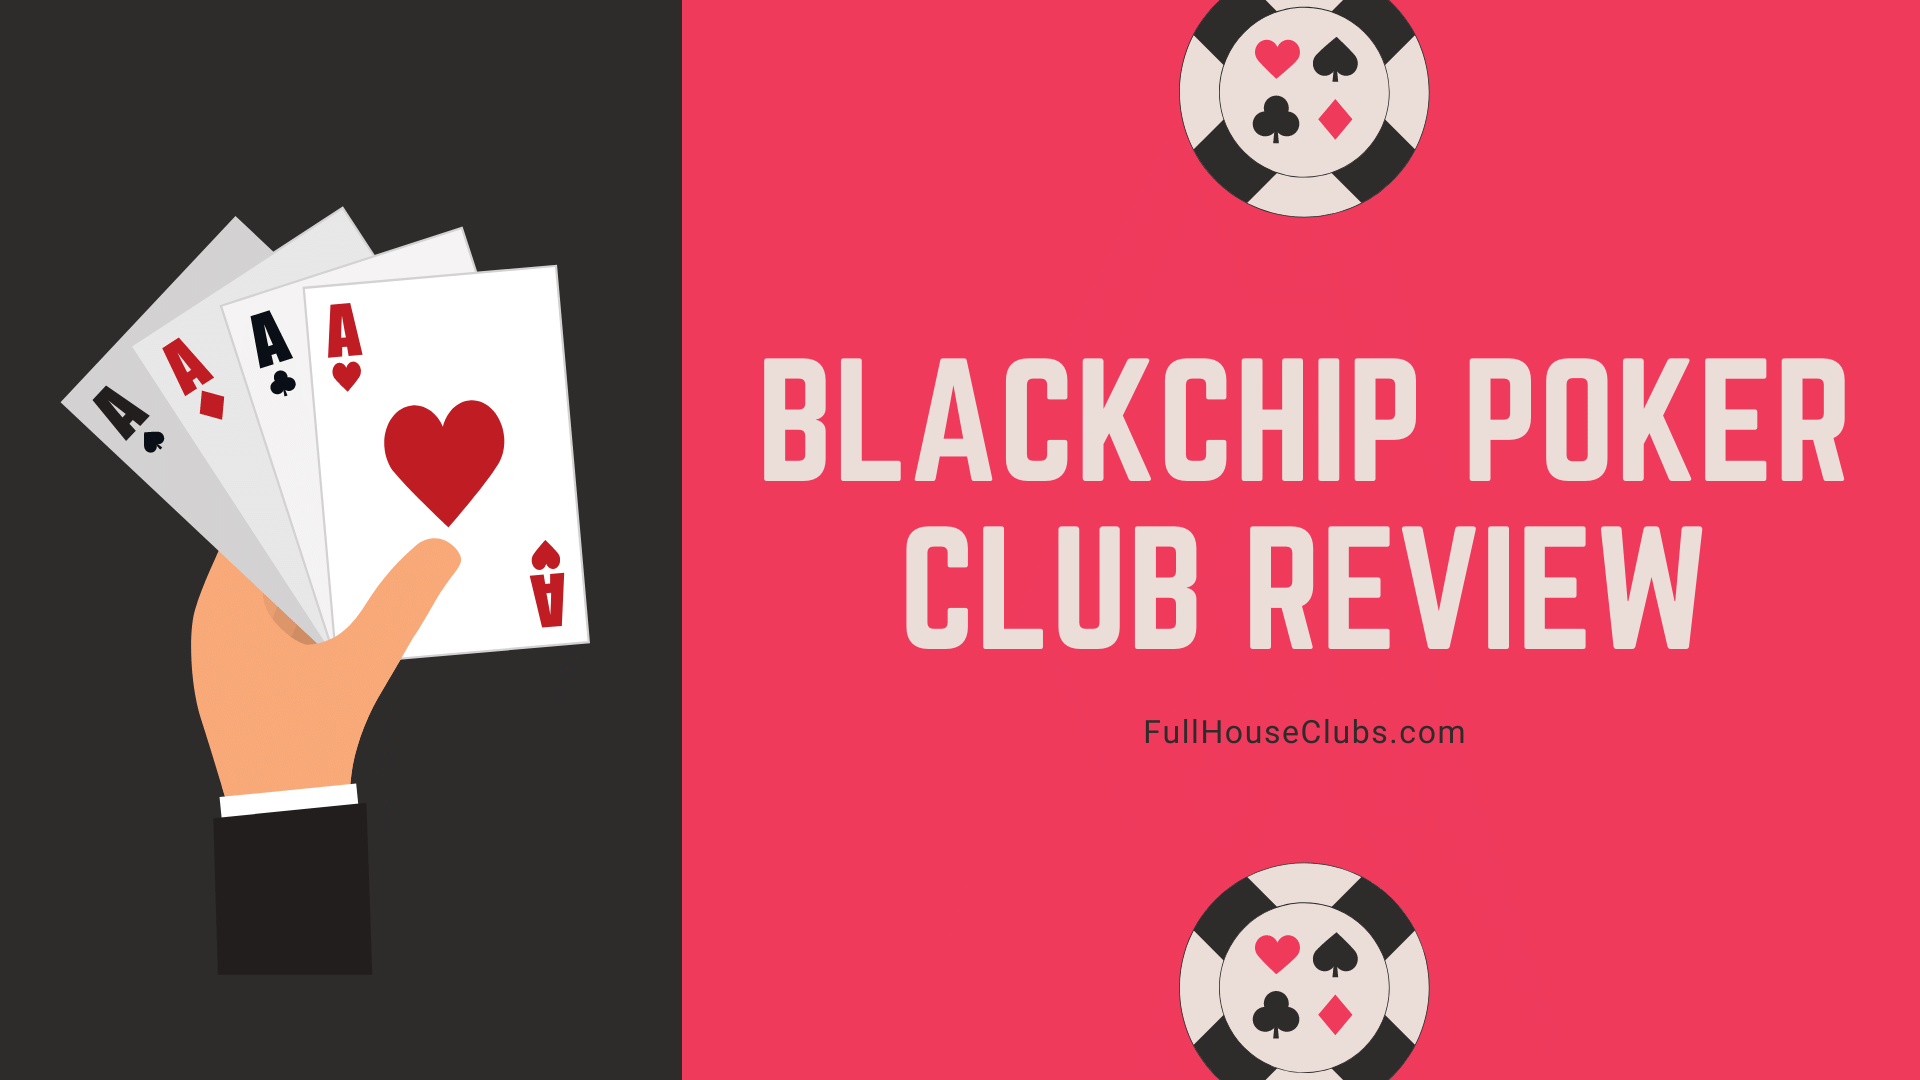 BlackChipPoker Review